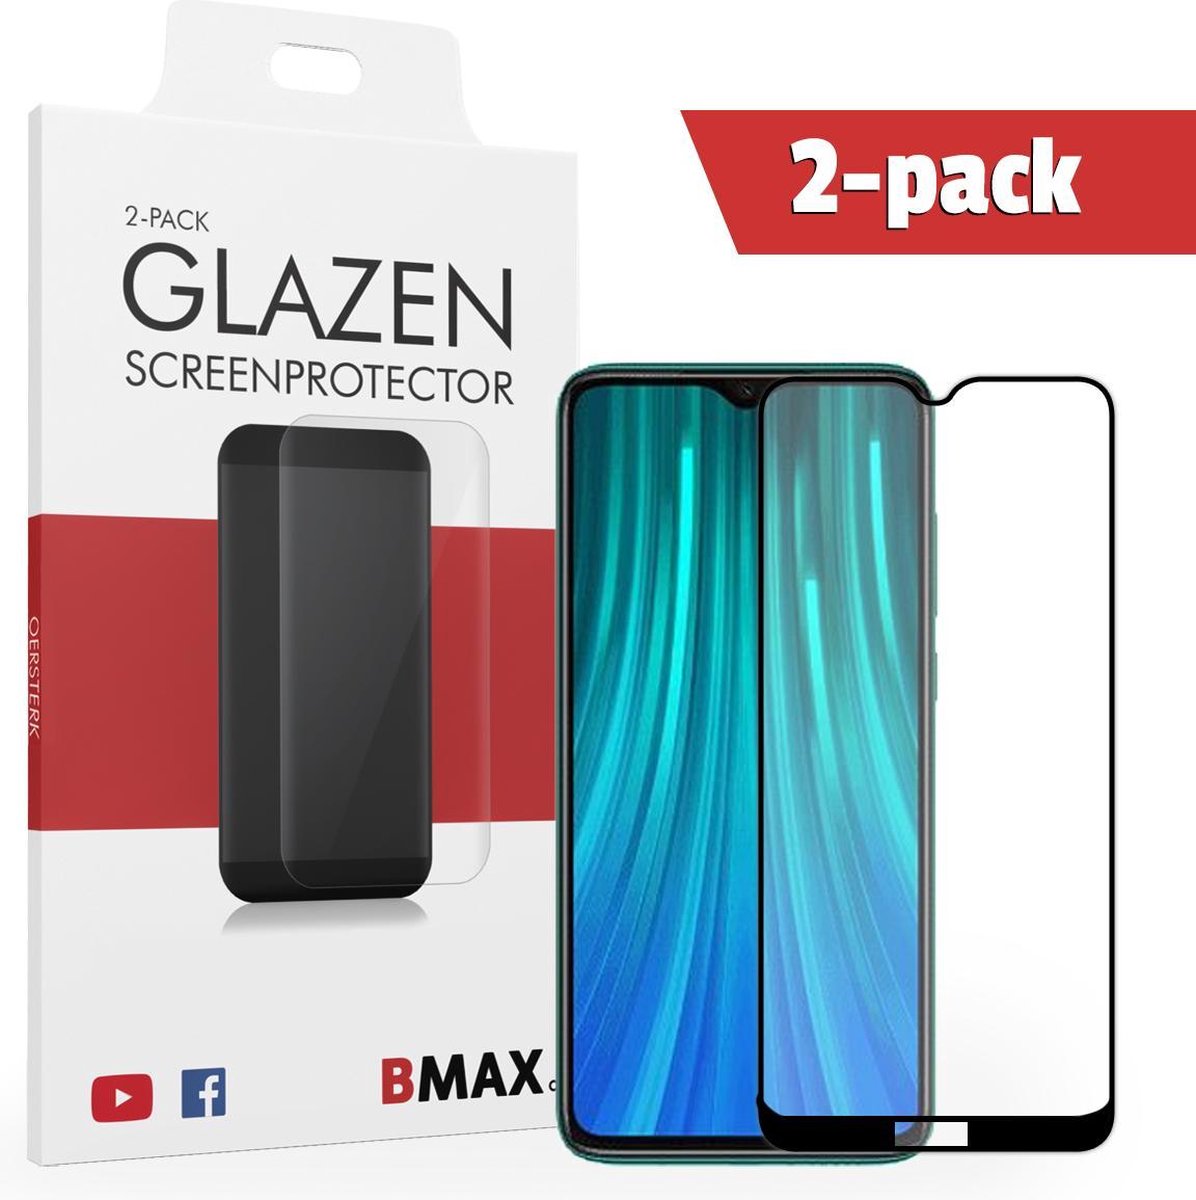 2-pack Bmax Xiaomi Redmi Note 8 Screenprotector - Glass - Full Cover 2.5d - Black